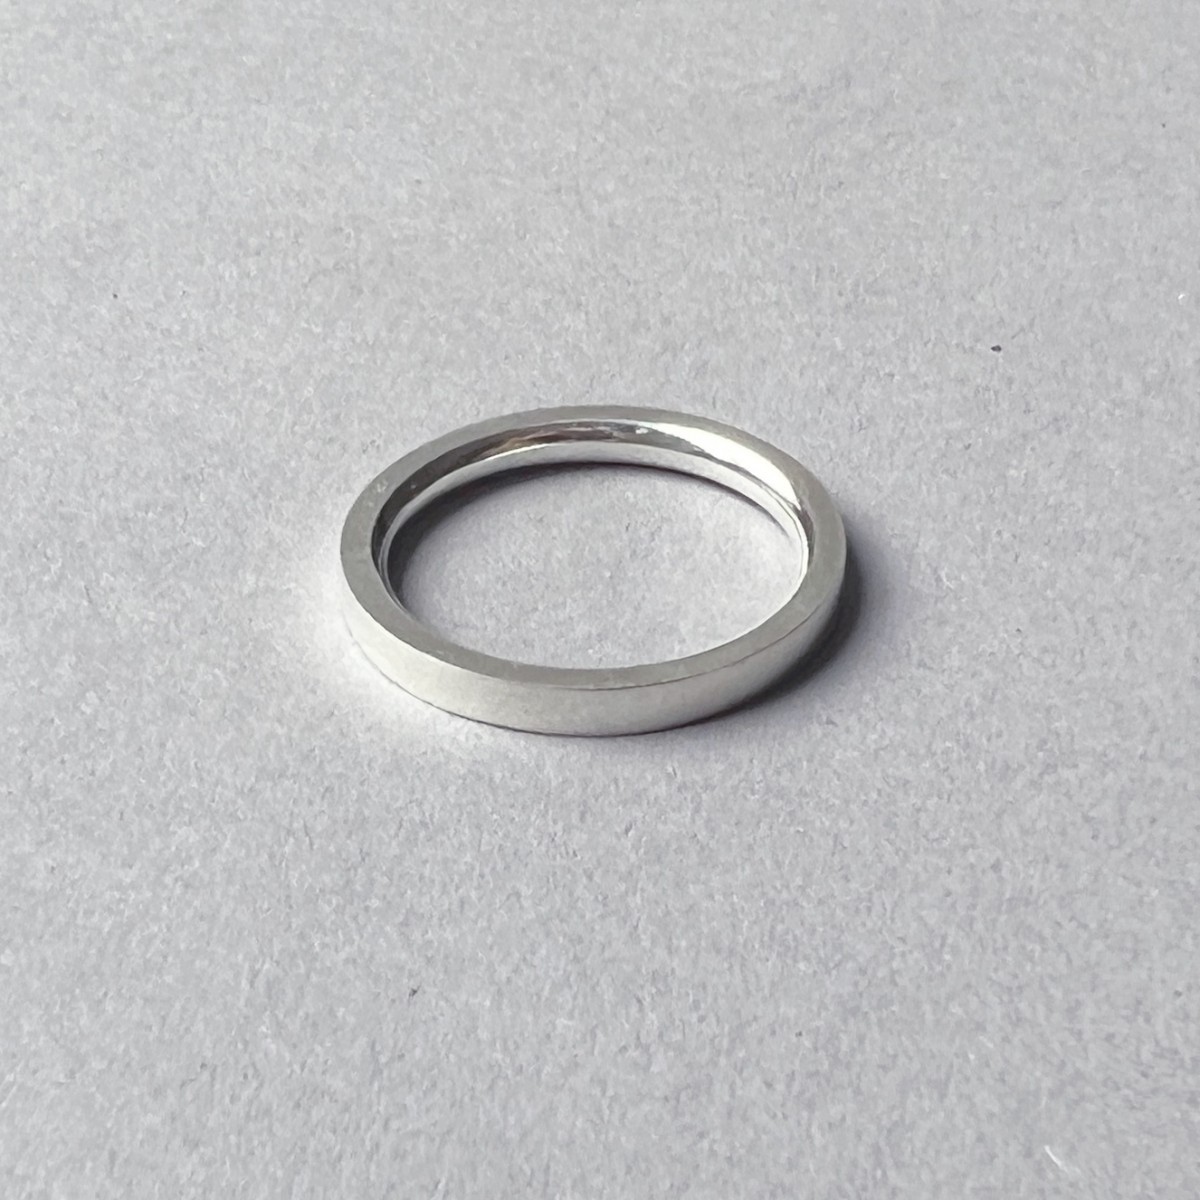 Teresa Gruber
Ring "Square"